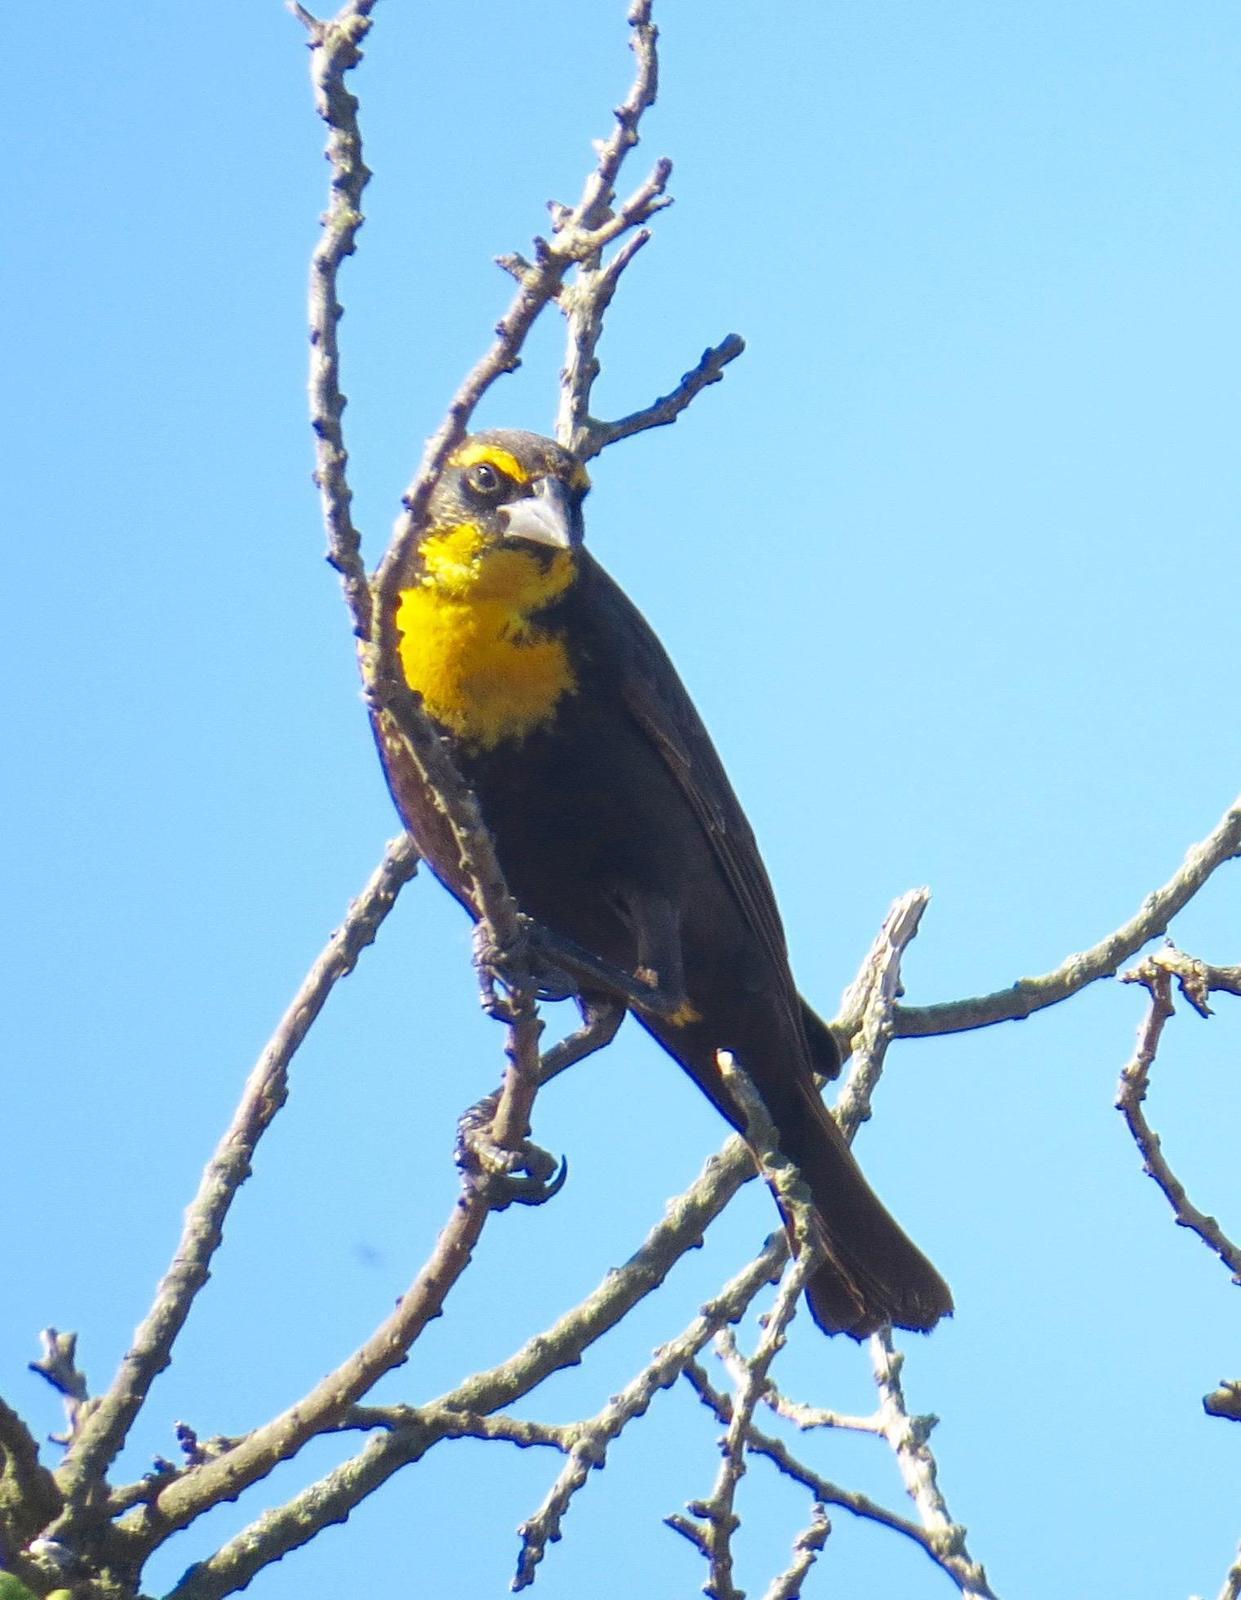 Yellow-headed Blackbird Photo by Don Glasco